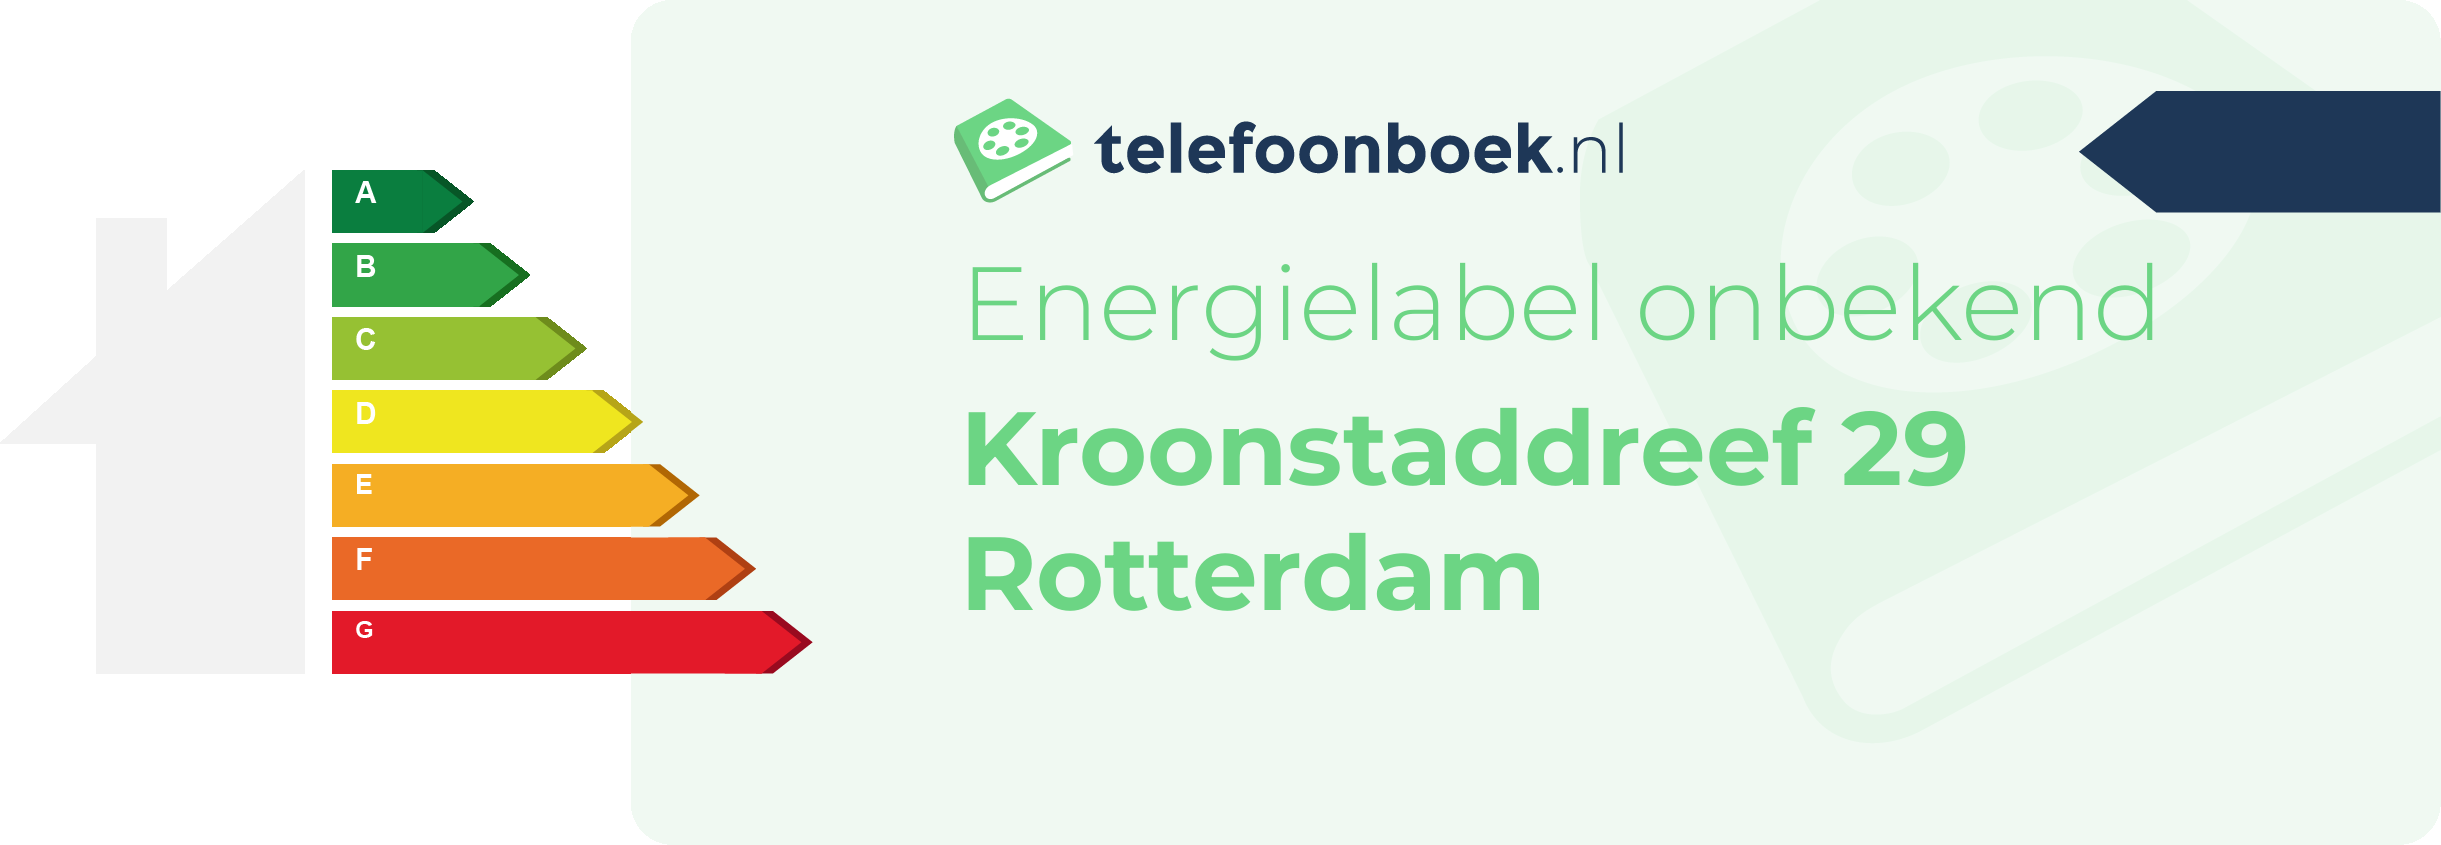 Energielabel Kroonstaddreef 29 Rotterdam